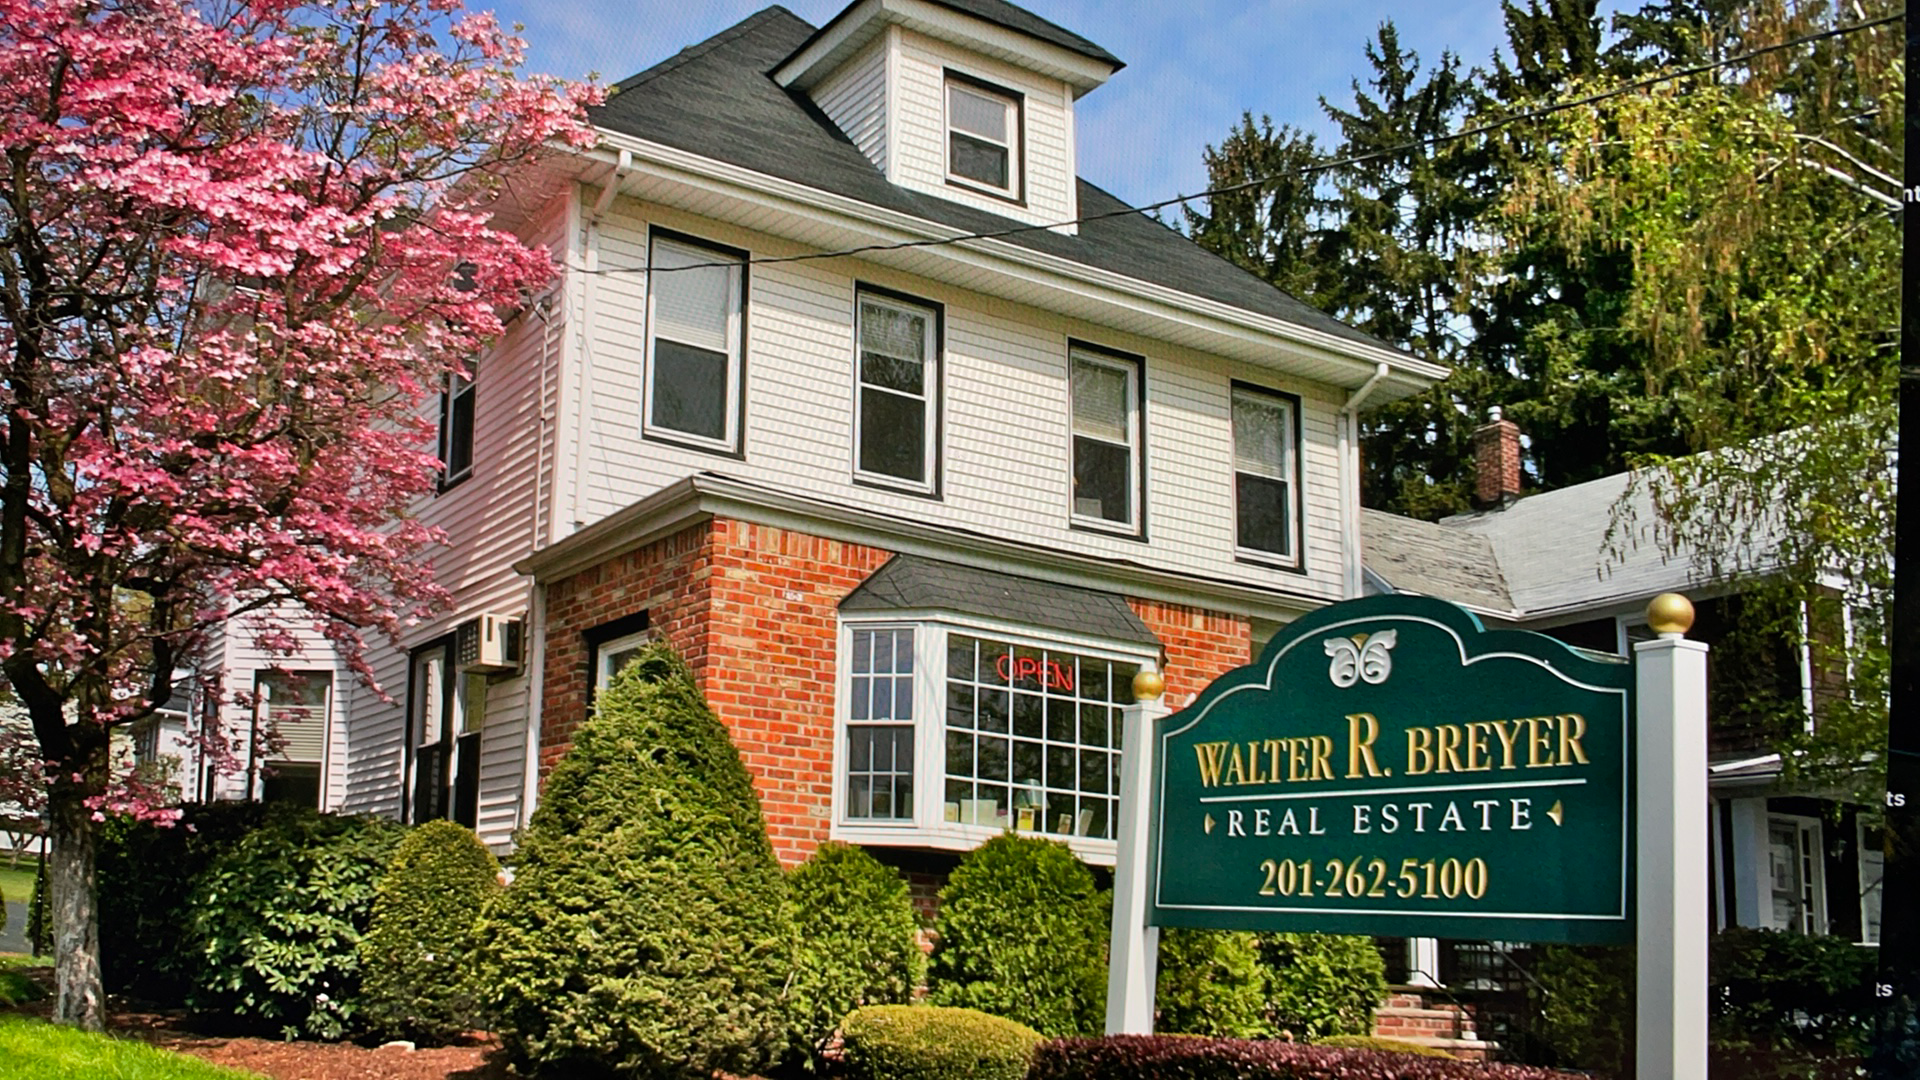 Walter R. Breyer Real Estate Co., Inc.